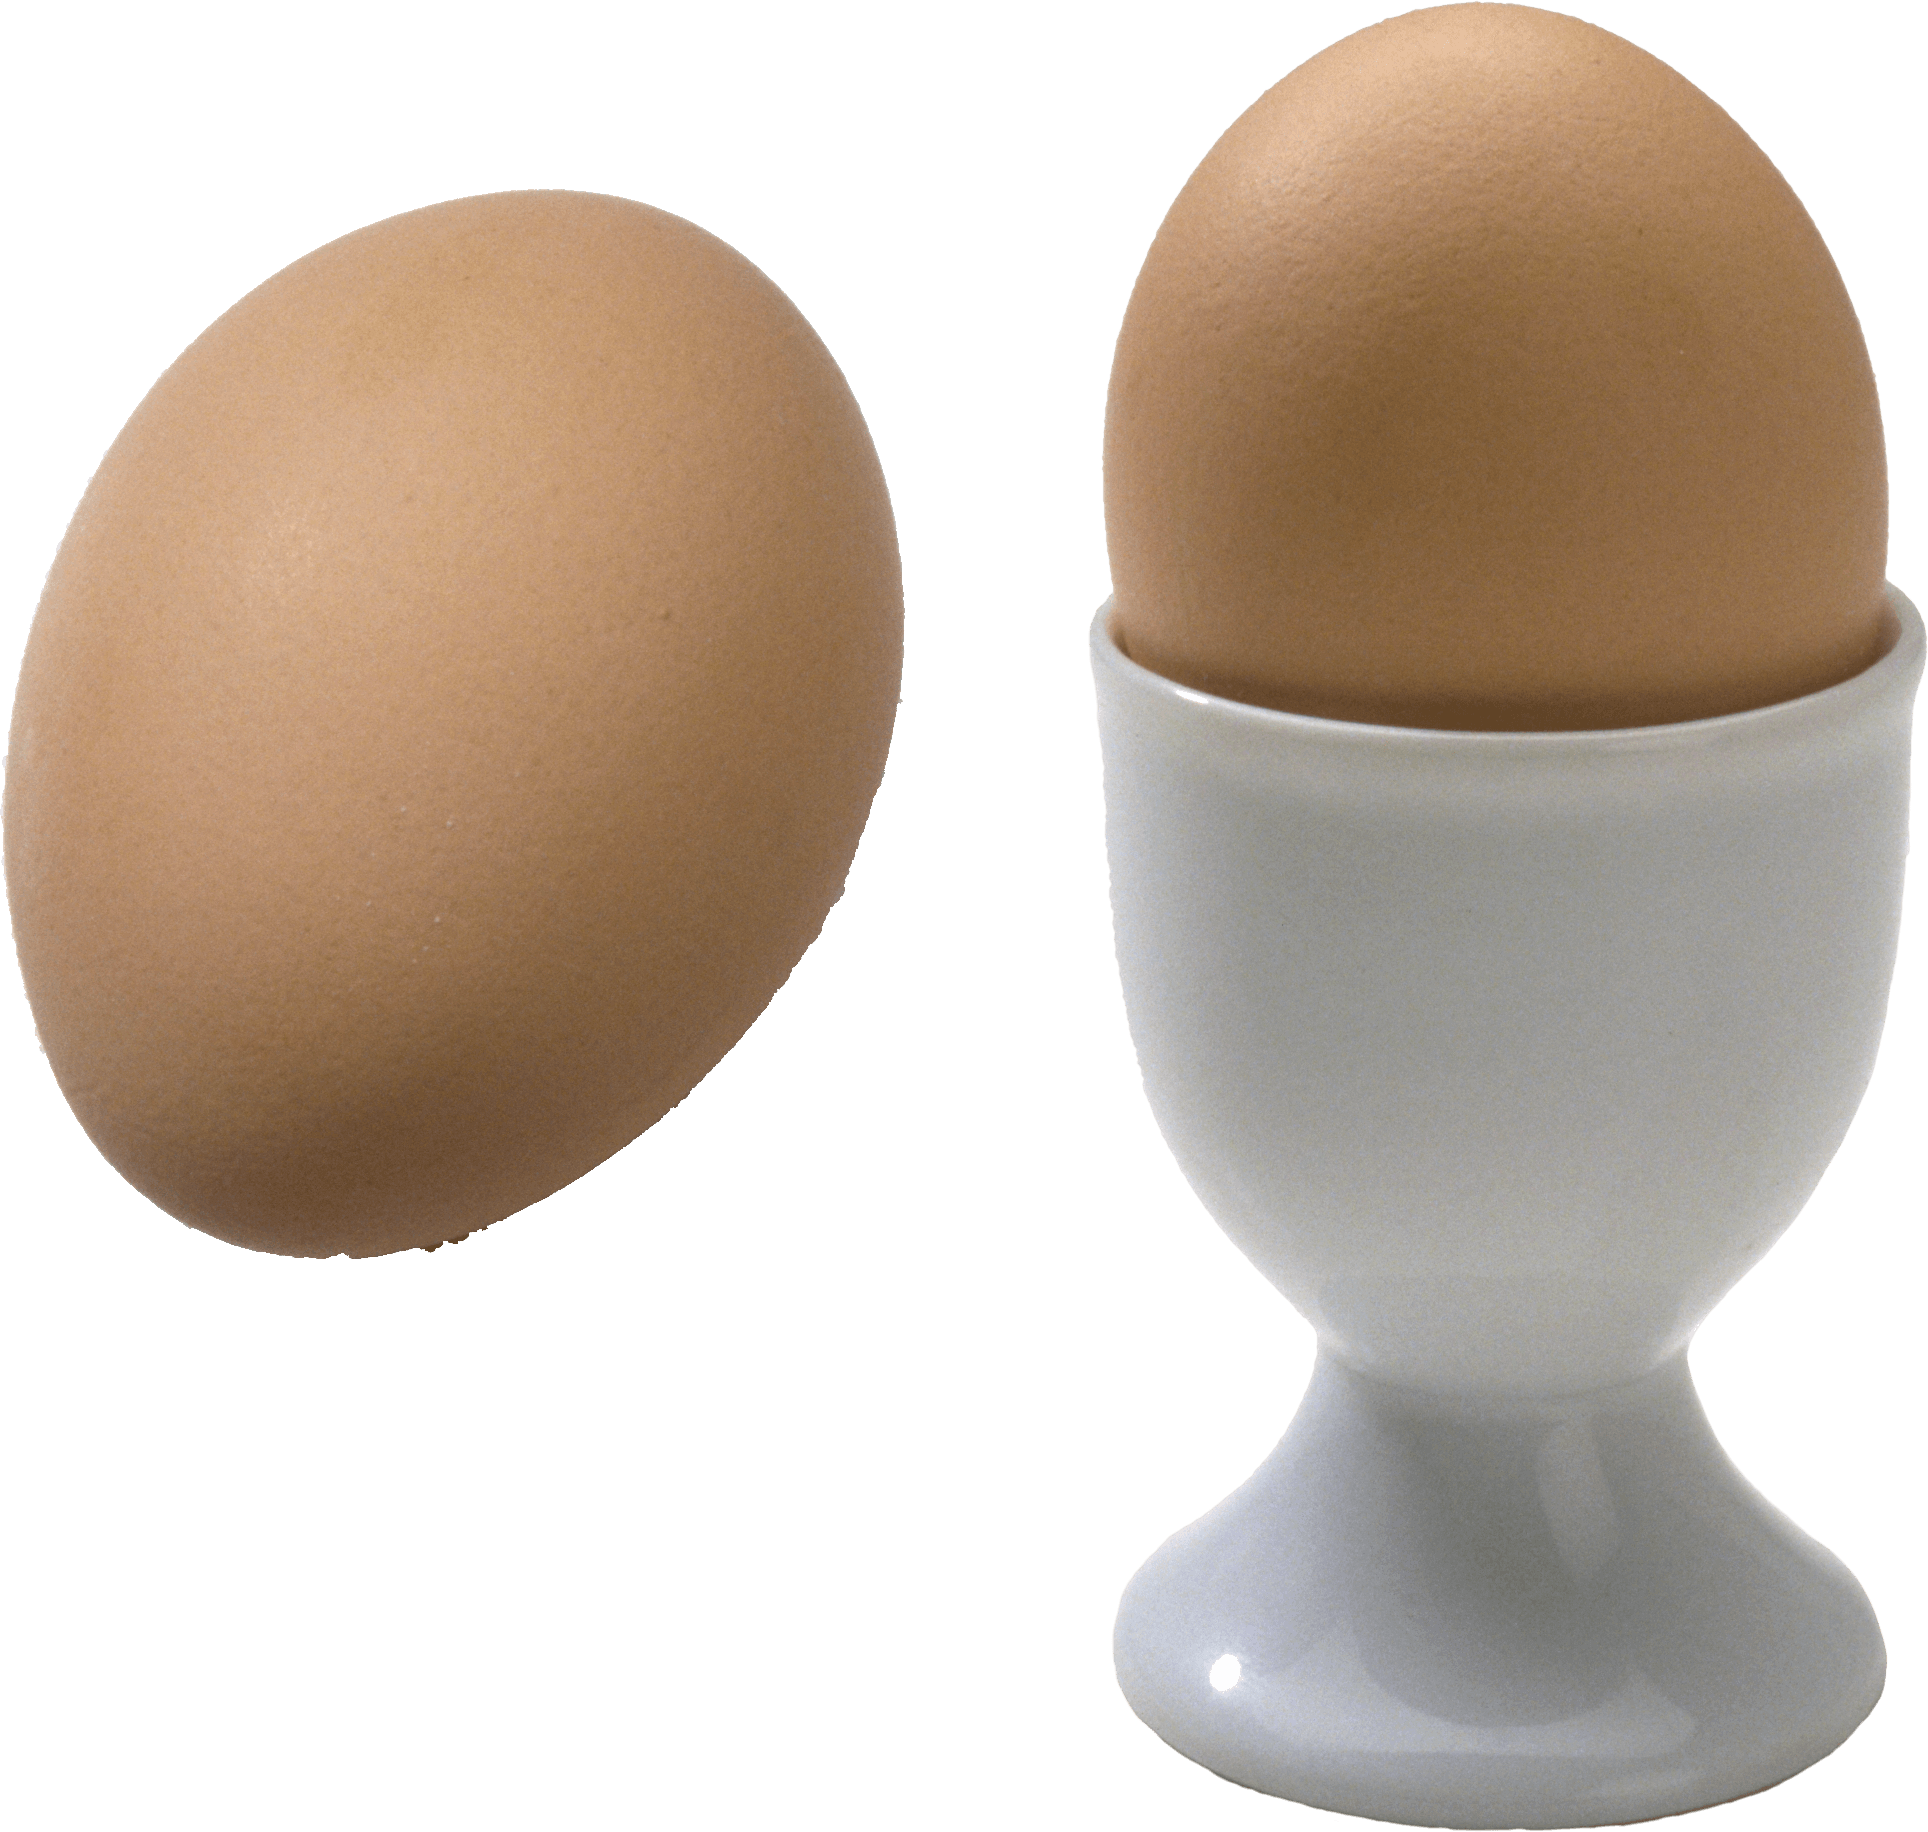 Egg Png Image PNG Image